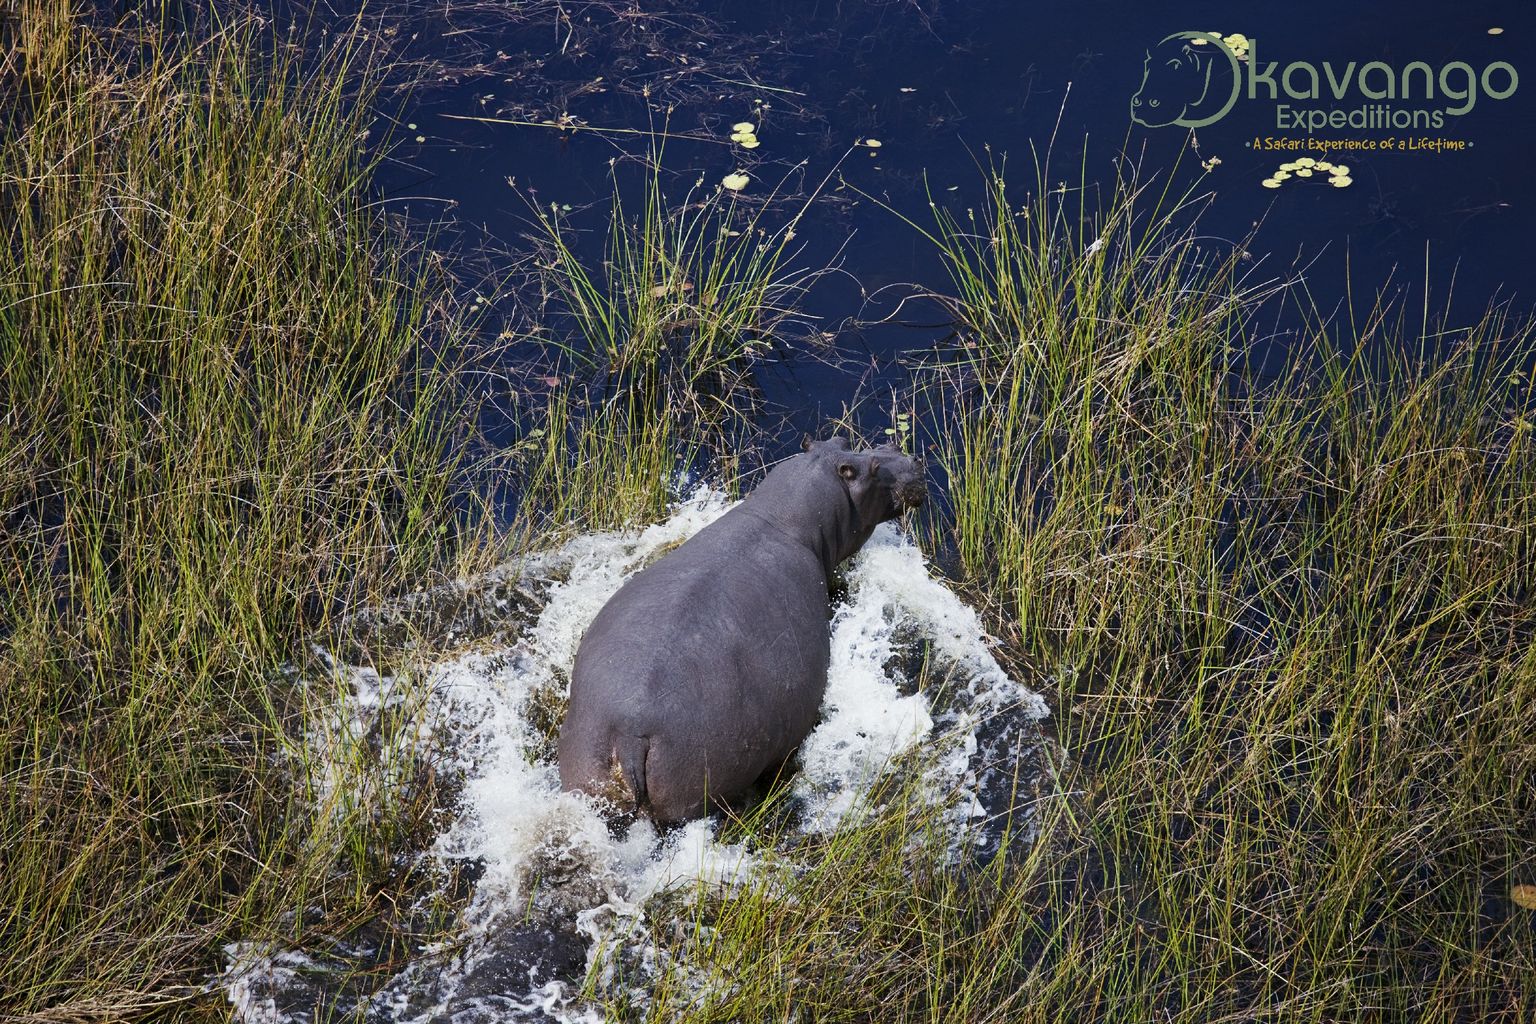 Hippopotamus (Hippopotamus amphibius) in the Okavango Delta.